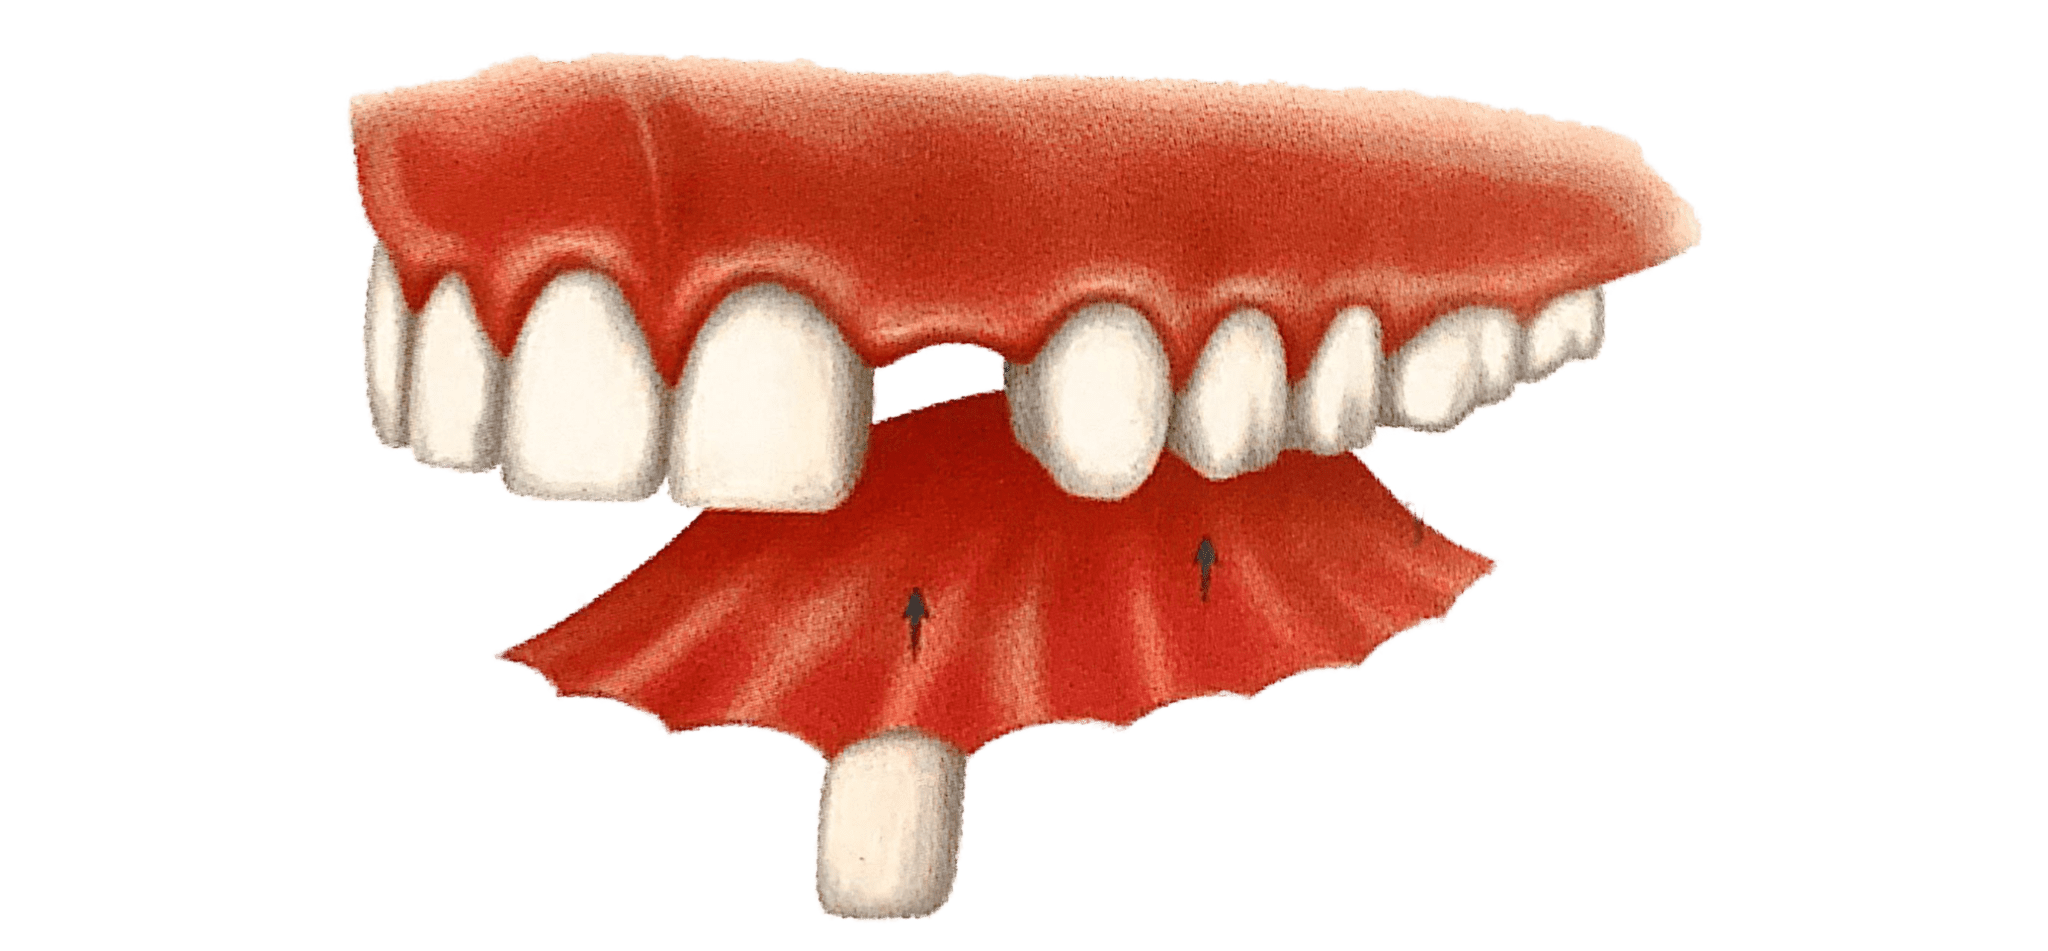 Single missing teeth